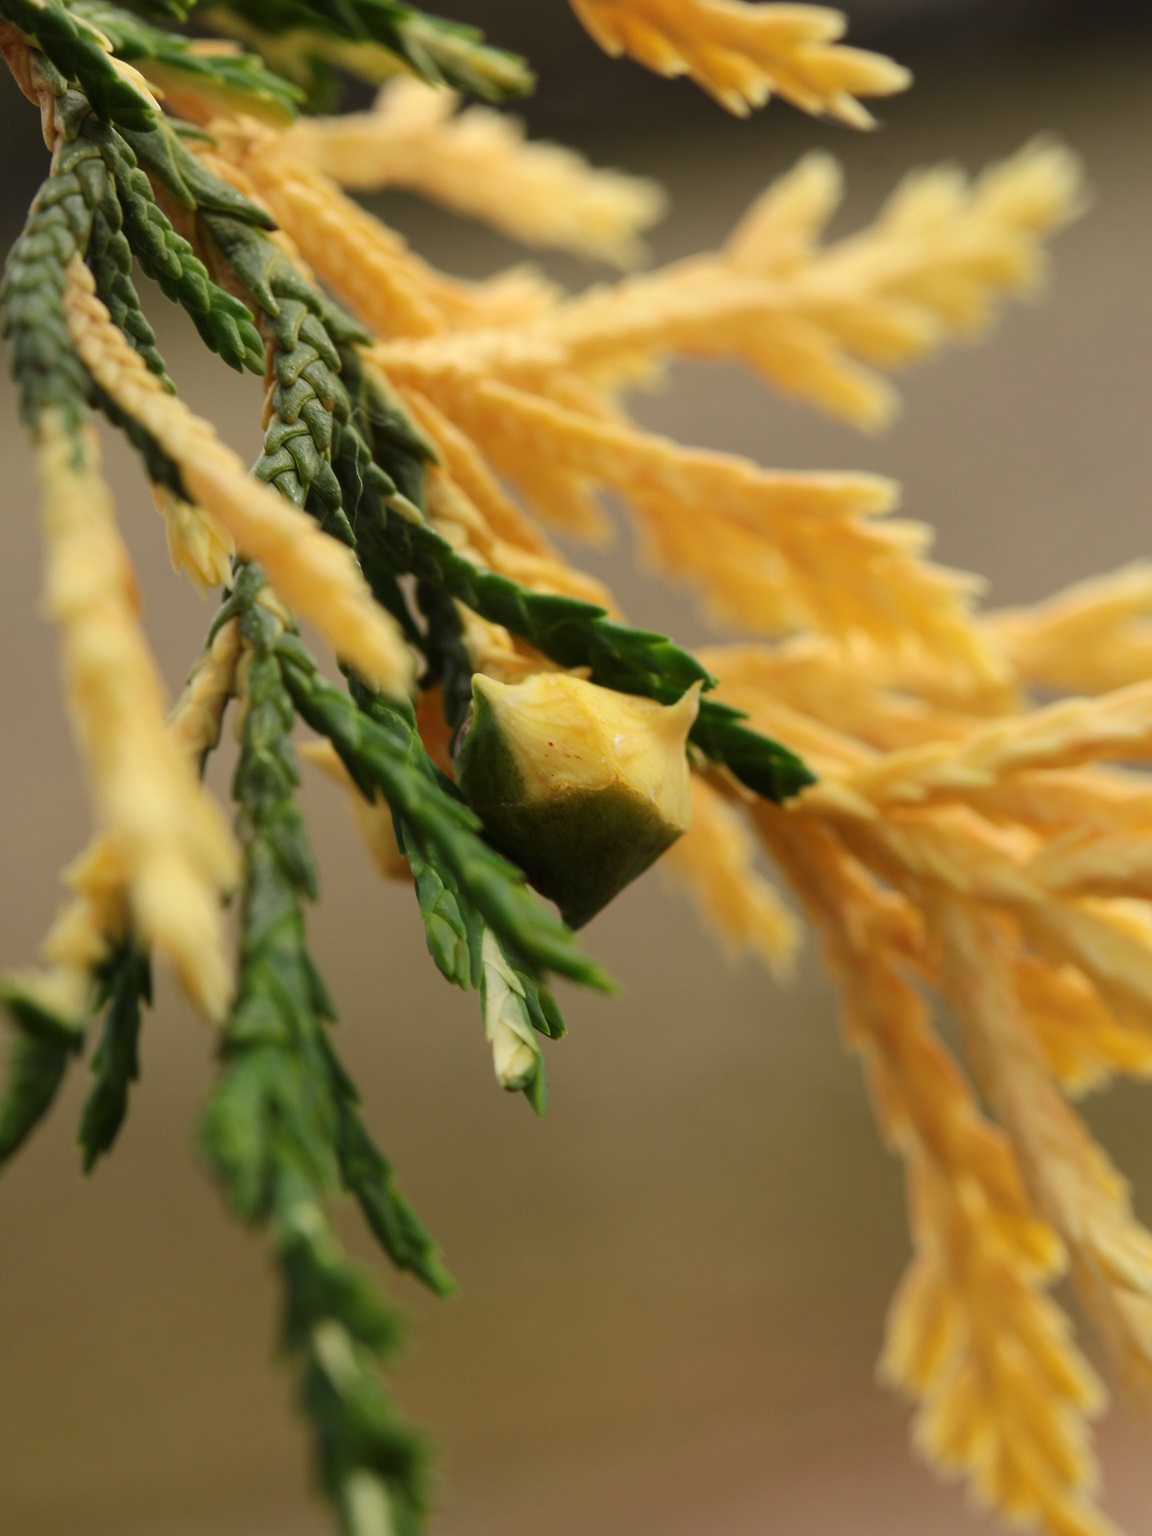 Buttered Popcorn Alaskan Cedar